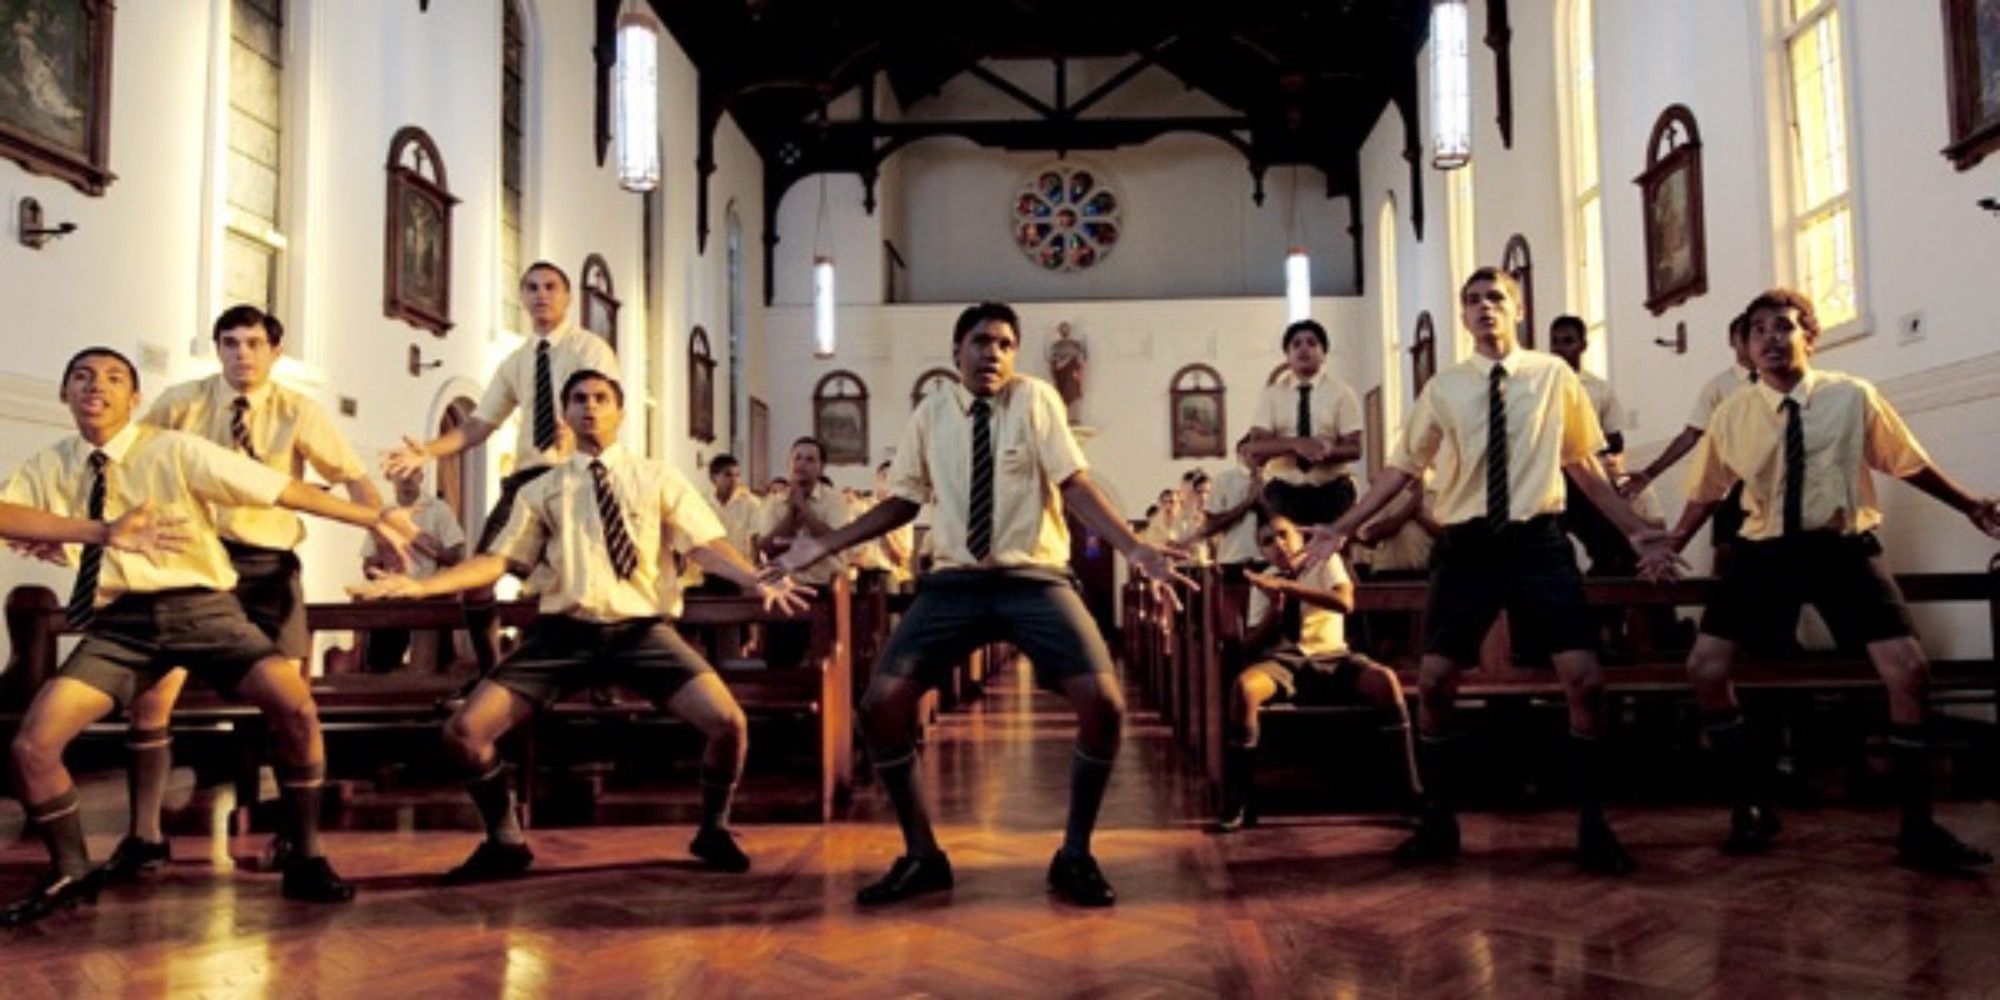 Boys dancing in the church pews